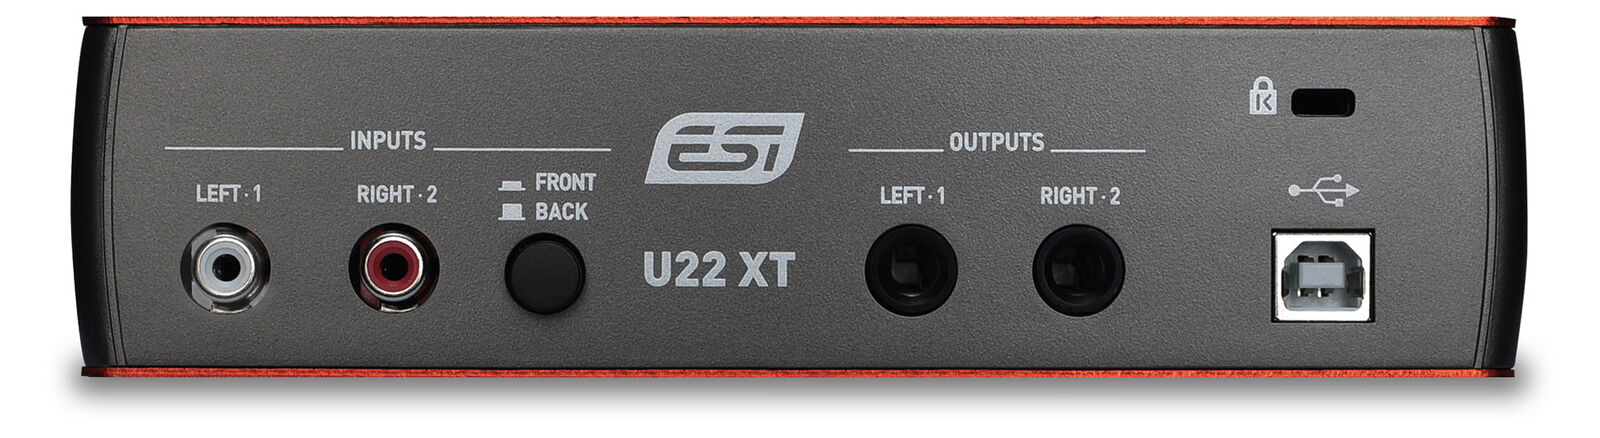 ESI U22 XT USB 2.0 Audiointerface 24-bit Software PC Mac XLR Studio Recording